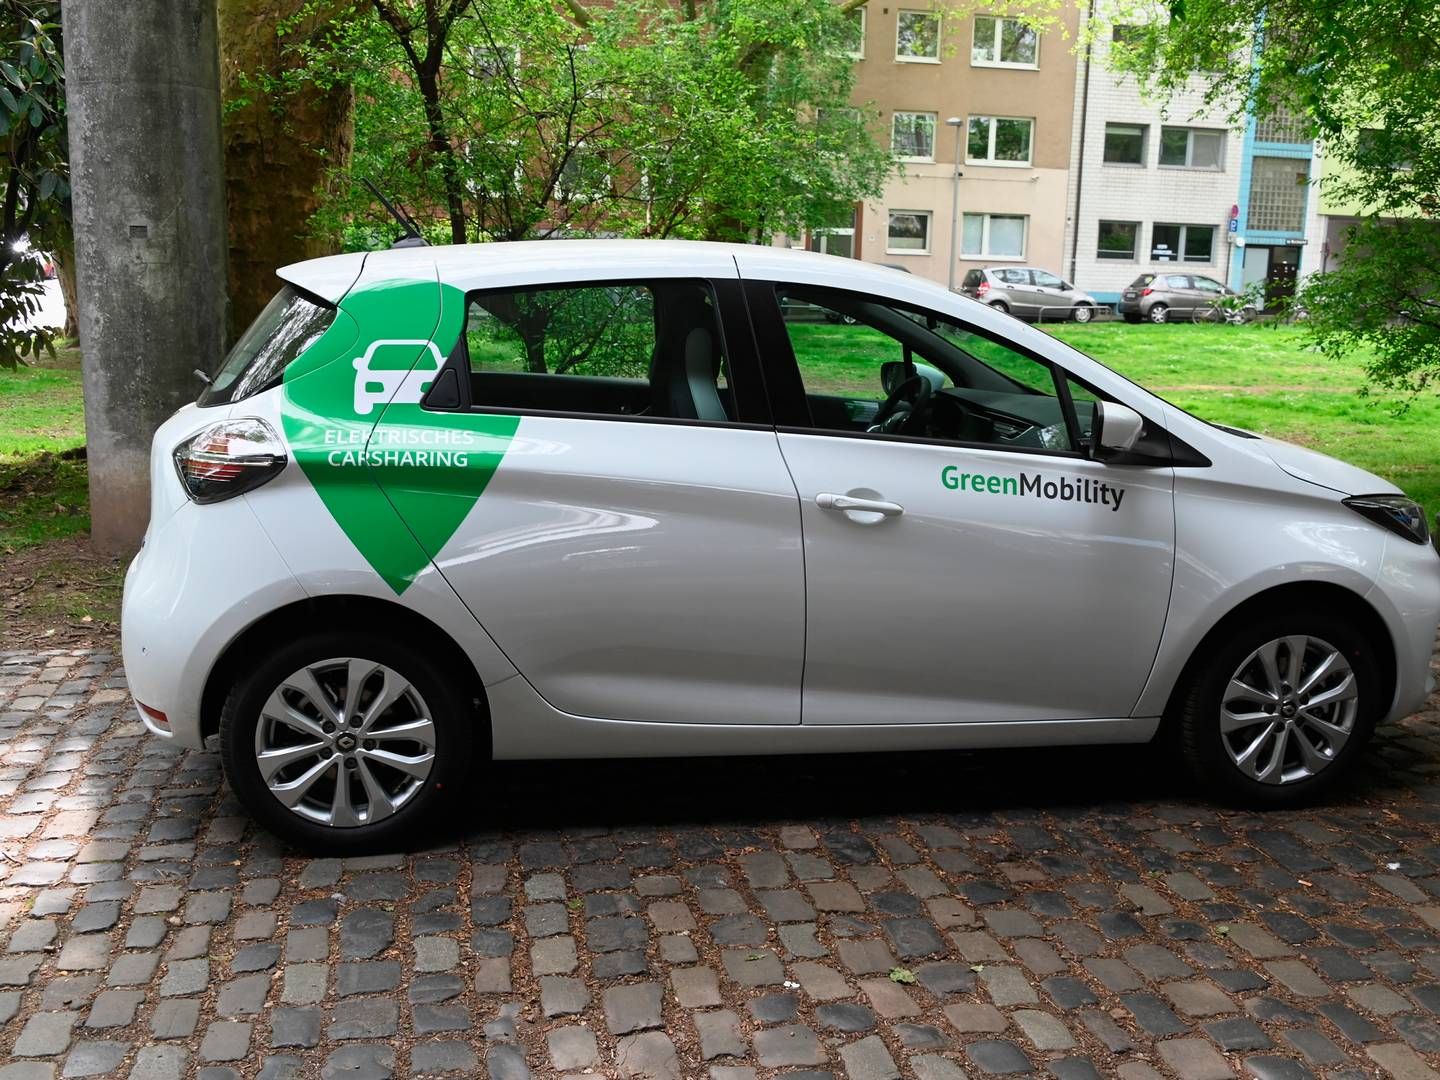 Delebilsfirmaet Greenmobility er blandt de nye medlemmer hos Mobility Denmark | Foto: Horst Galuschka/AP/Ritzau Scanpix